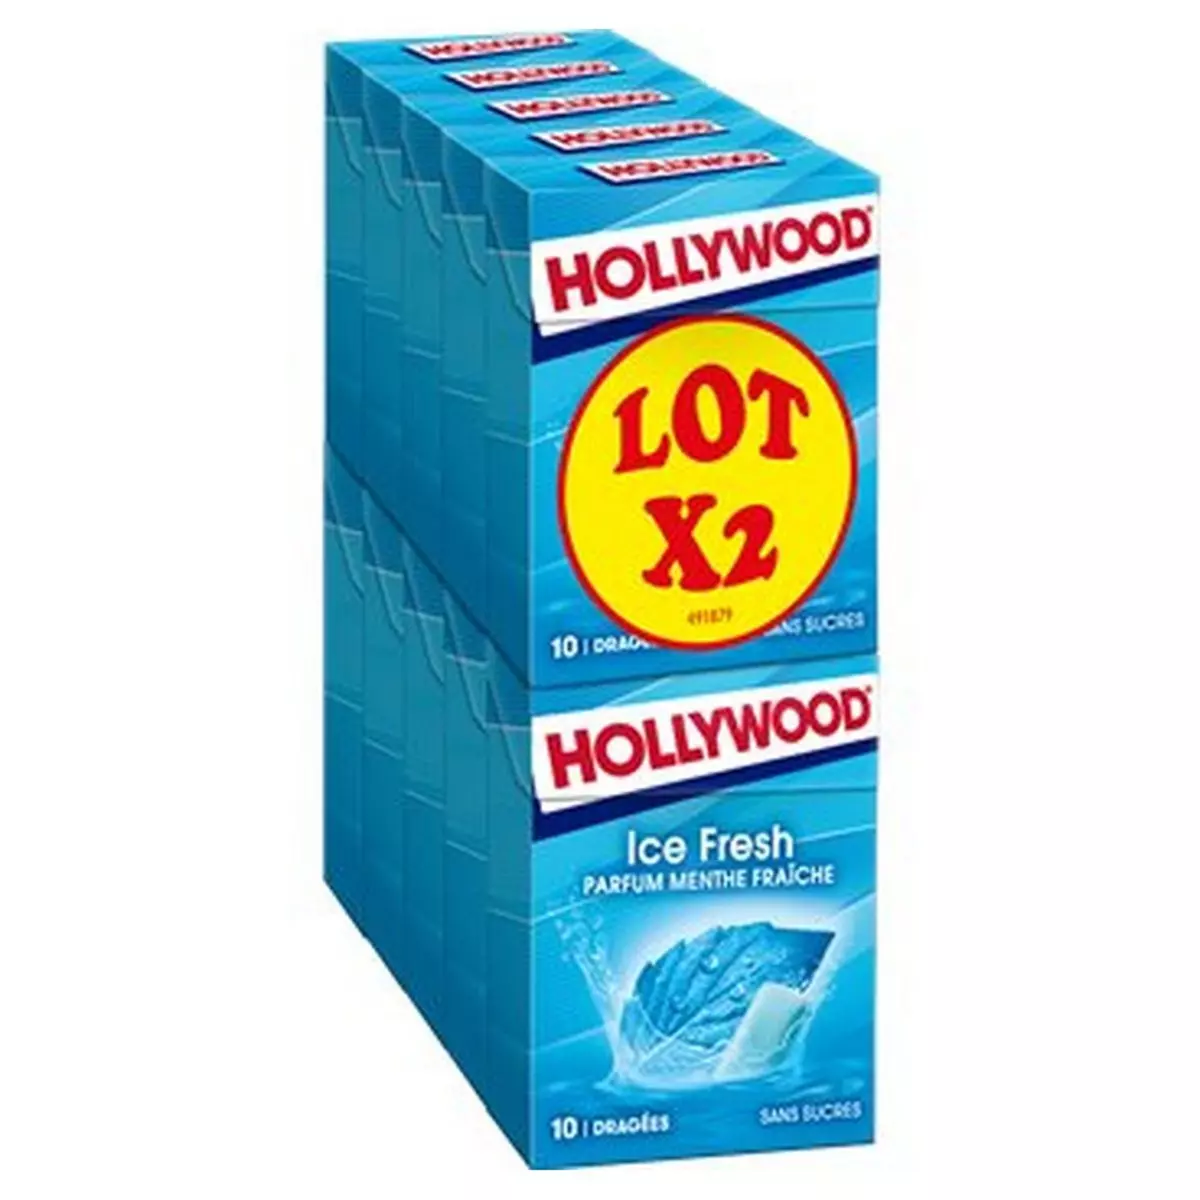 HOLLYWOOD Ice Fresh chewing-gum parfum menthe fraiche 10x10 dragées 140g